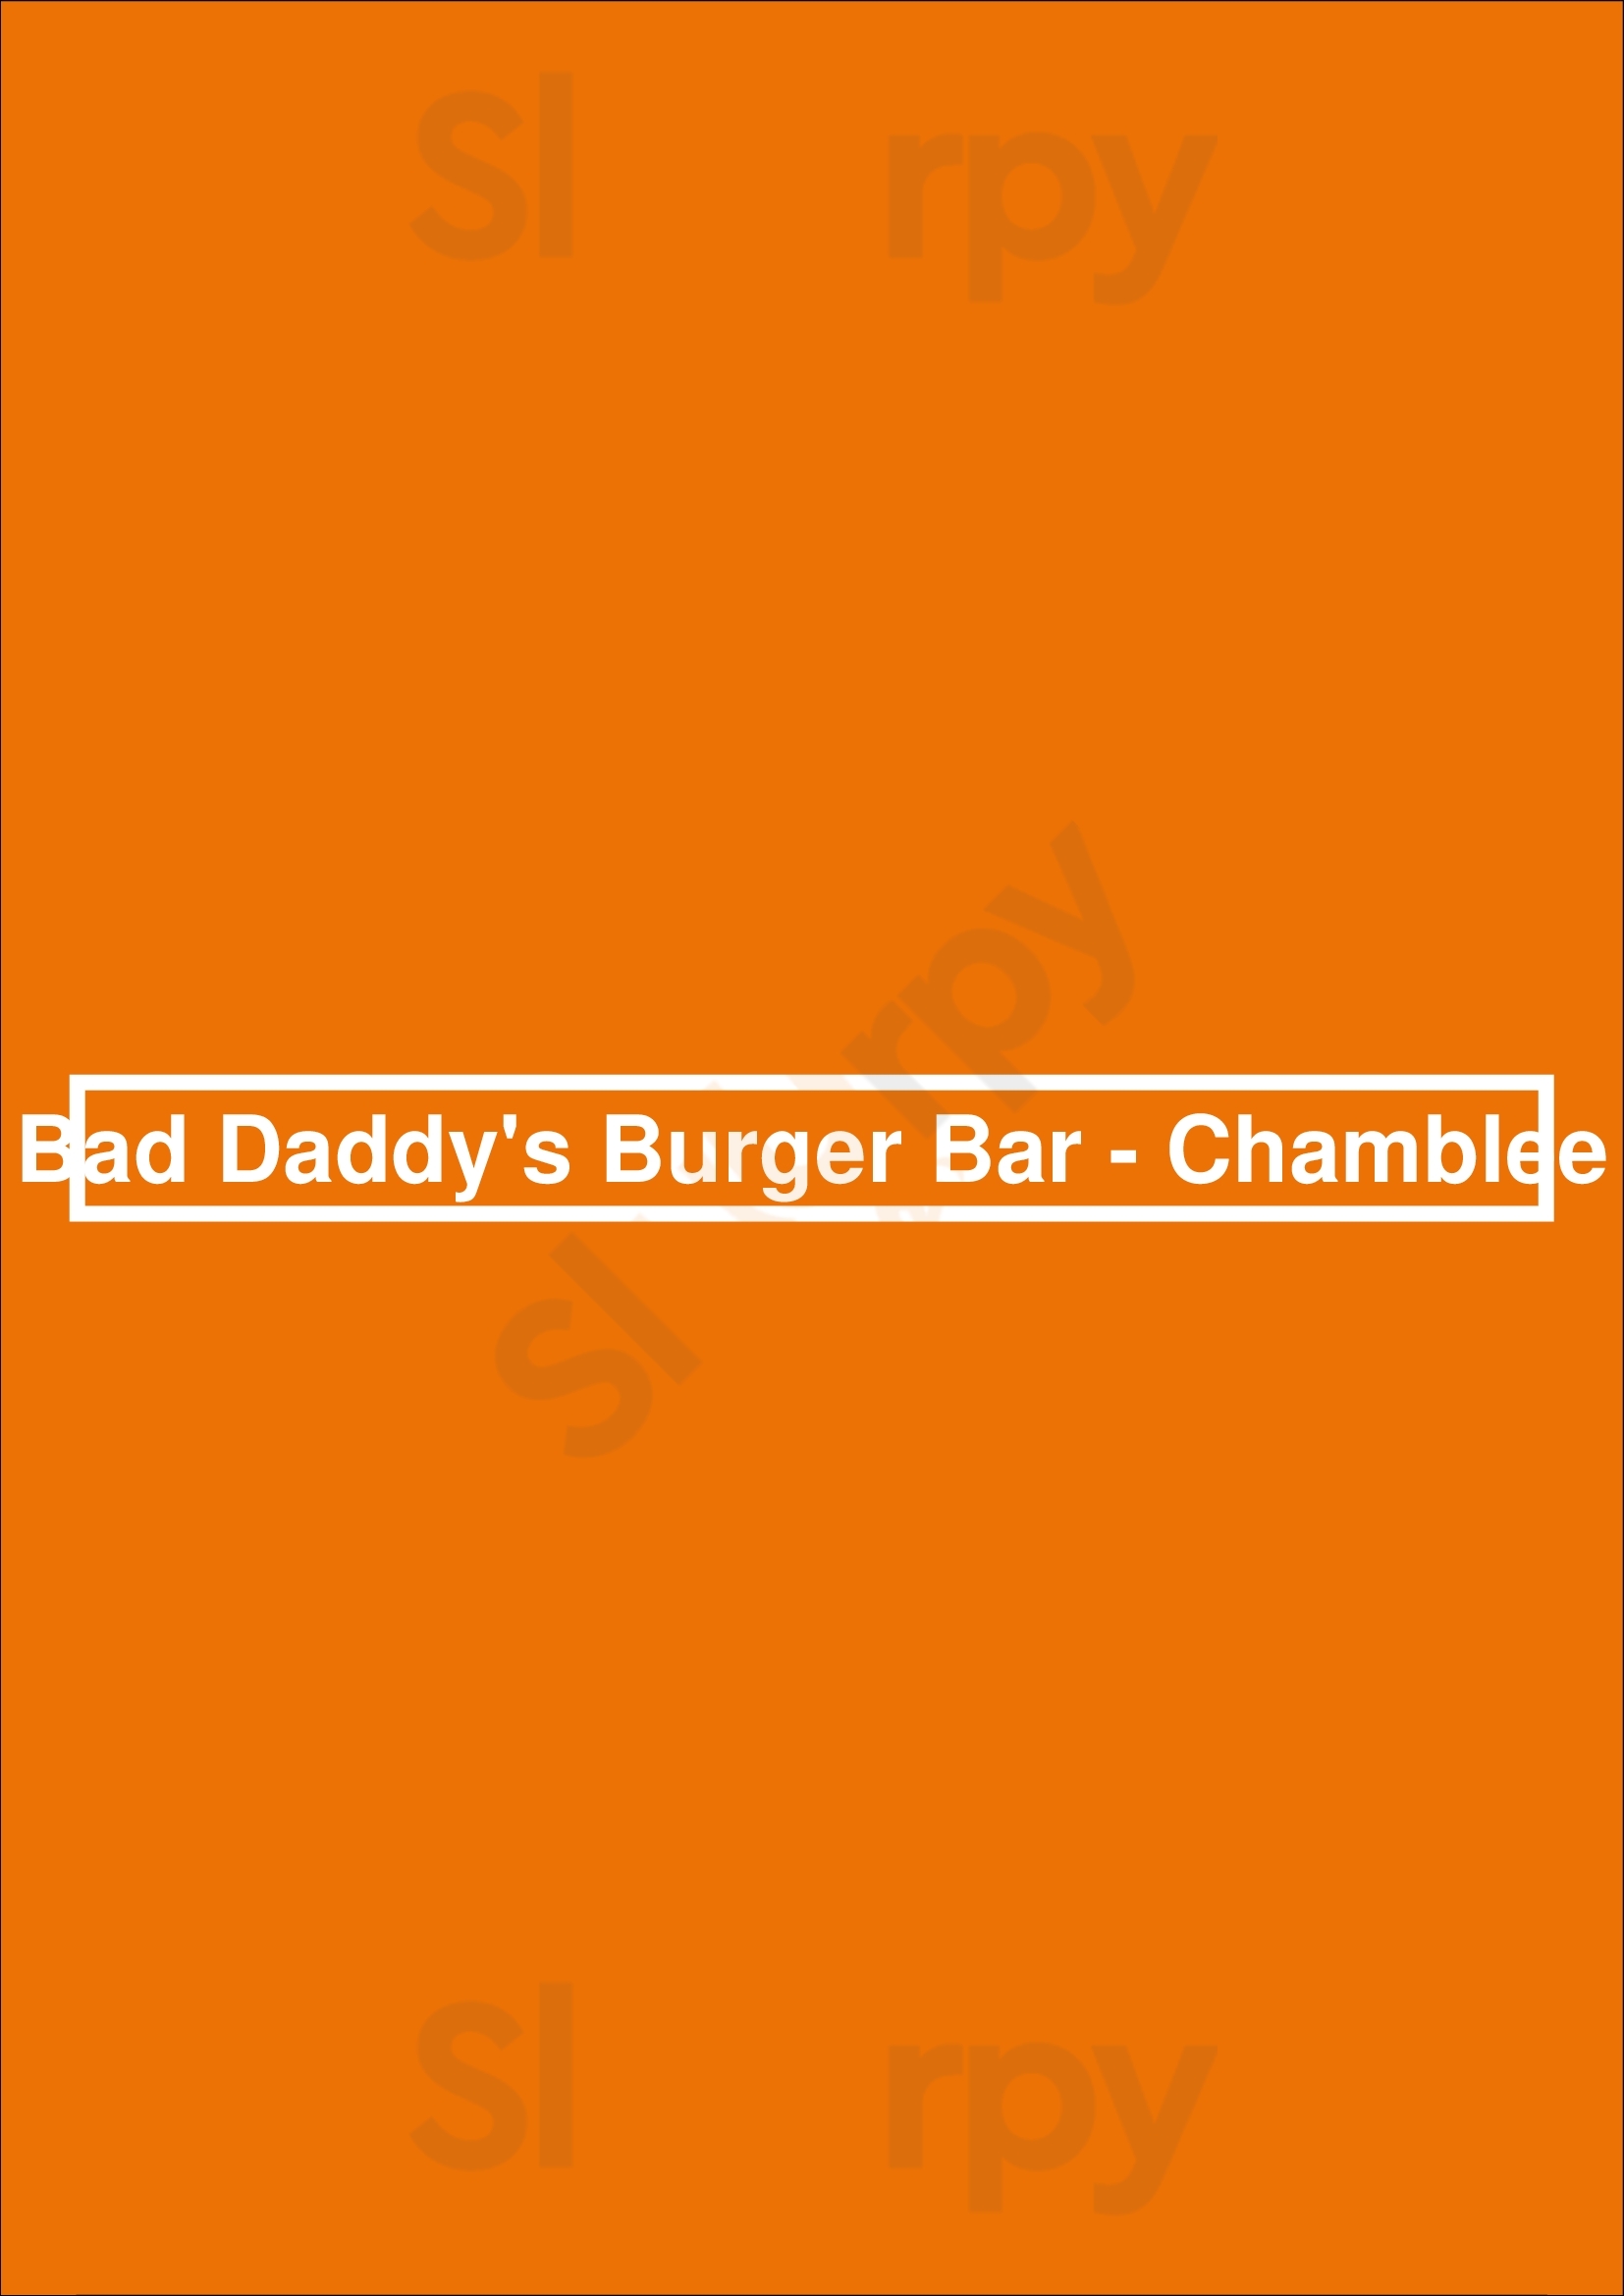 Bad Daddy's Burger Bar Chamblee Menu - 1